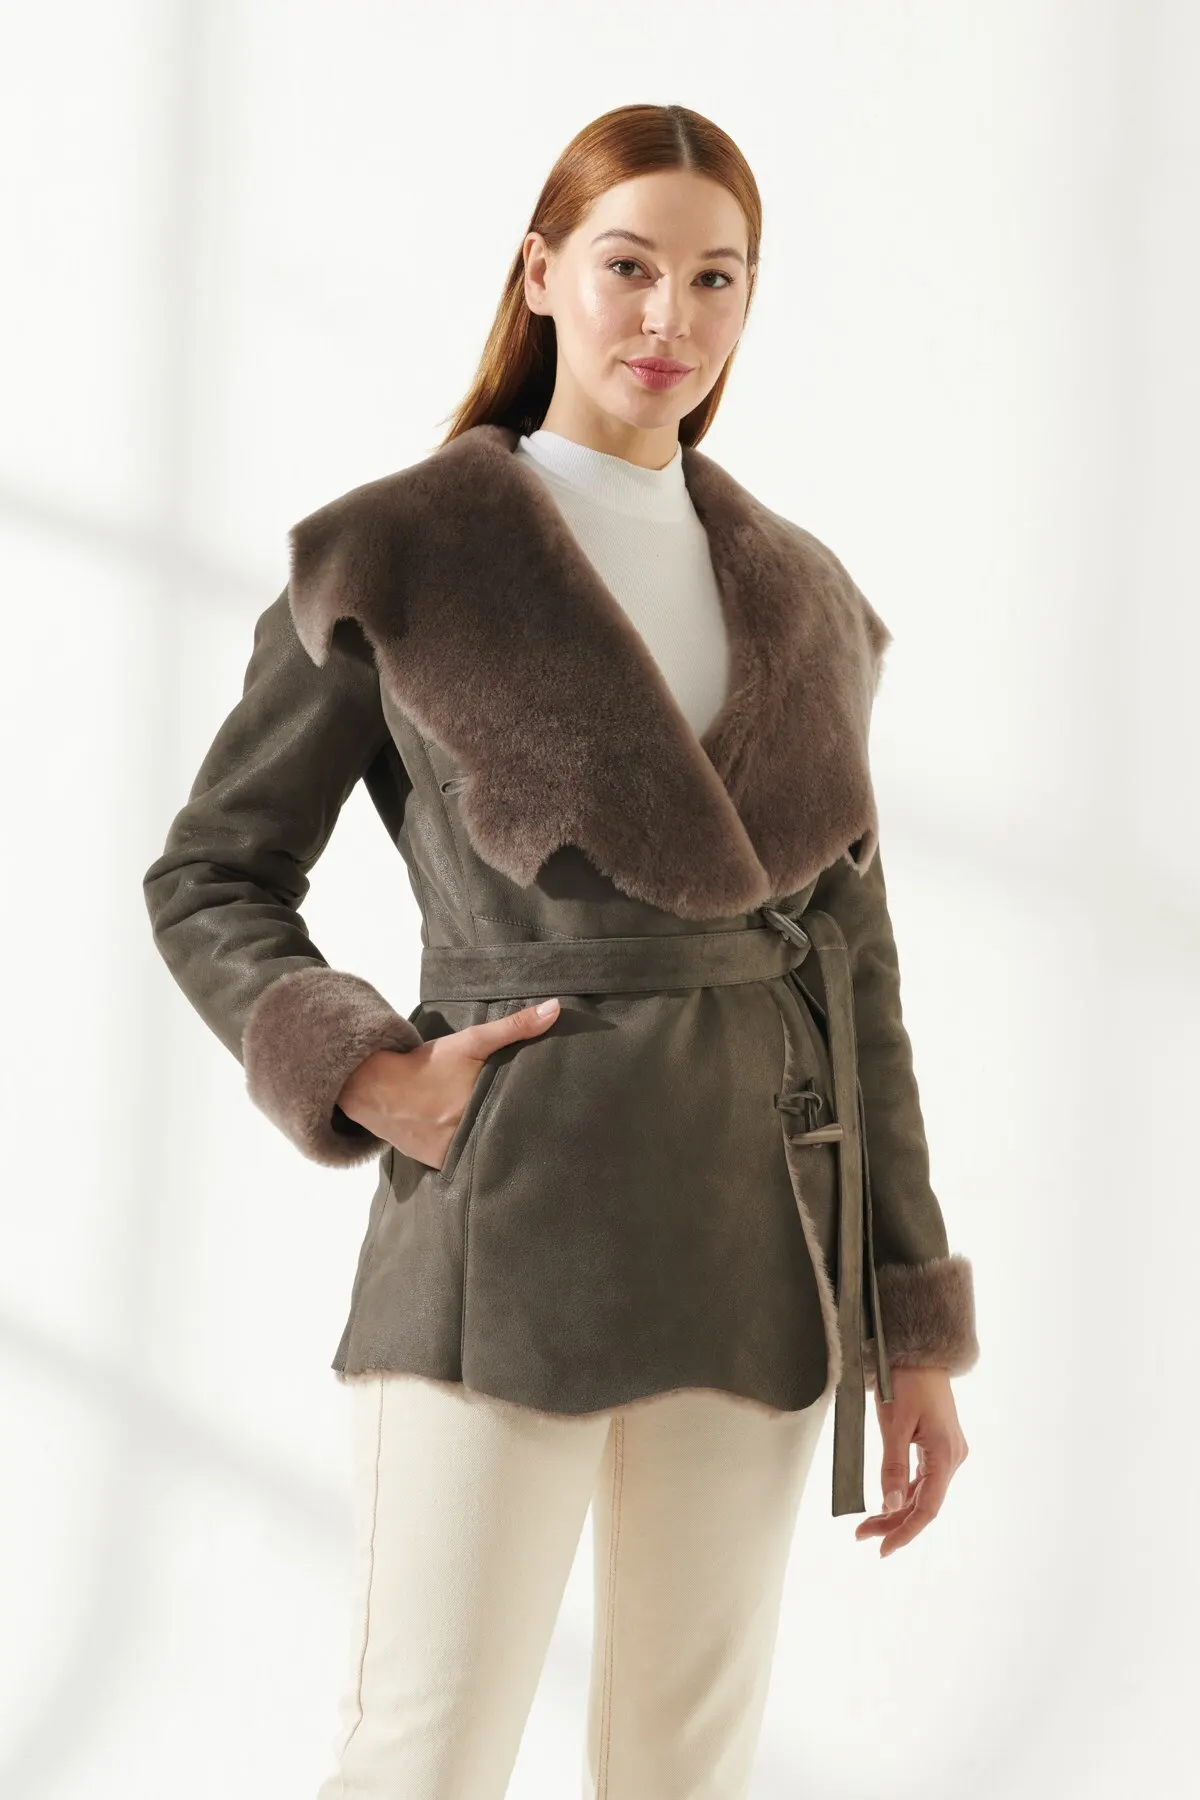 Women's Sports Gray Furry Leather Coat Winterwear Thick Montlar Keeps Warm Soft Genuine Sheepskin Turkiyede Produced New Street Fashion enlarge